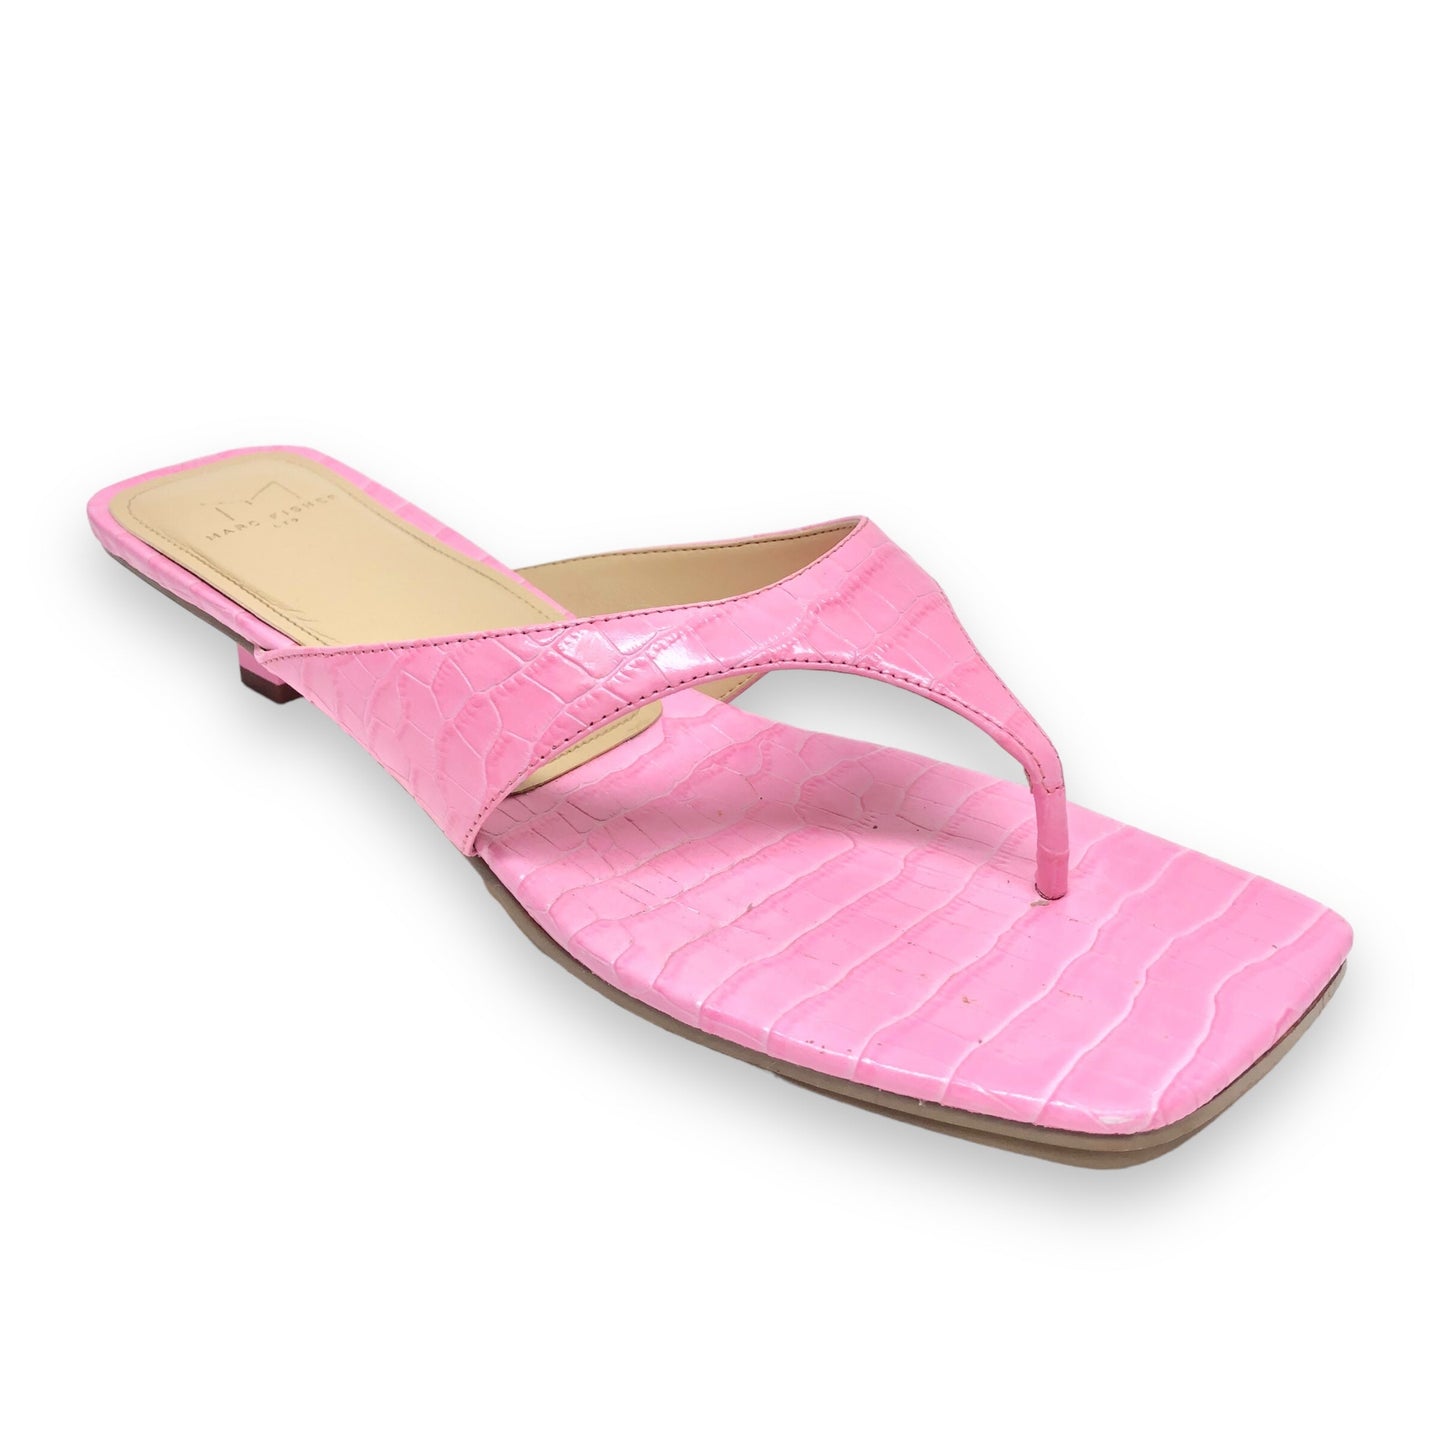 Pink Sandals Heels Kitten Marc Fisher, Size 10